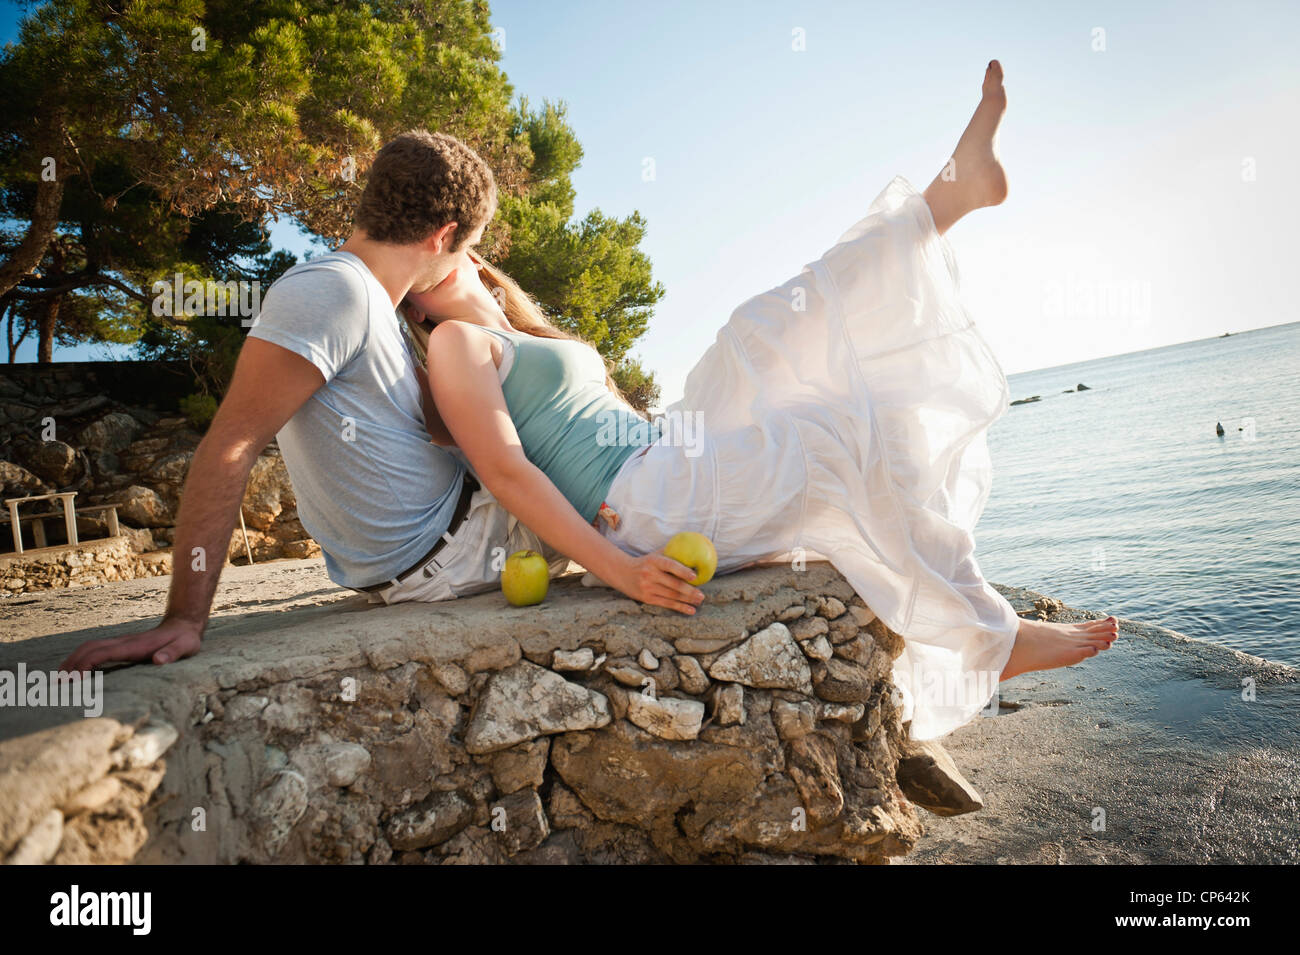 Spain, Mallorca, Couple sitting on beach, smiling Stock Photo